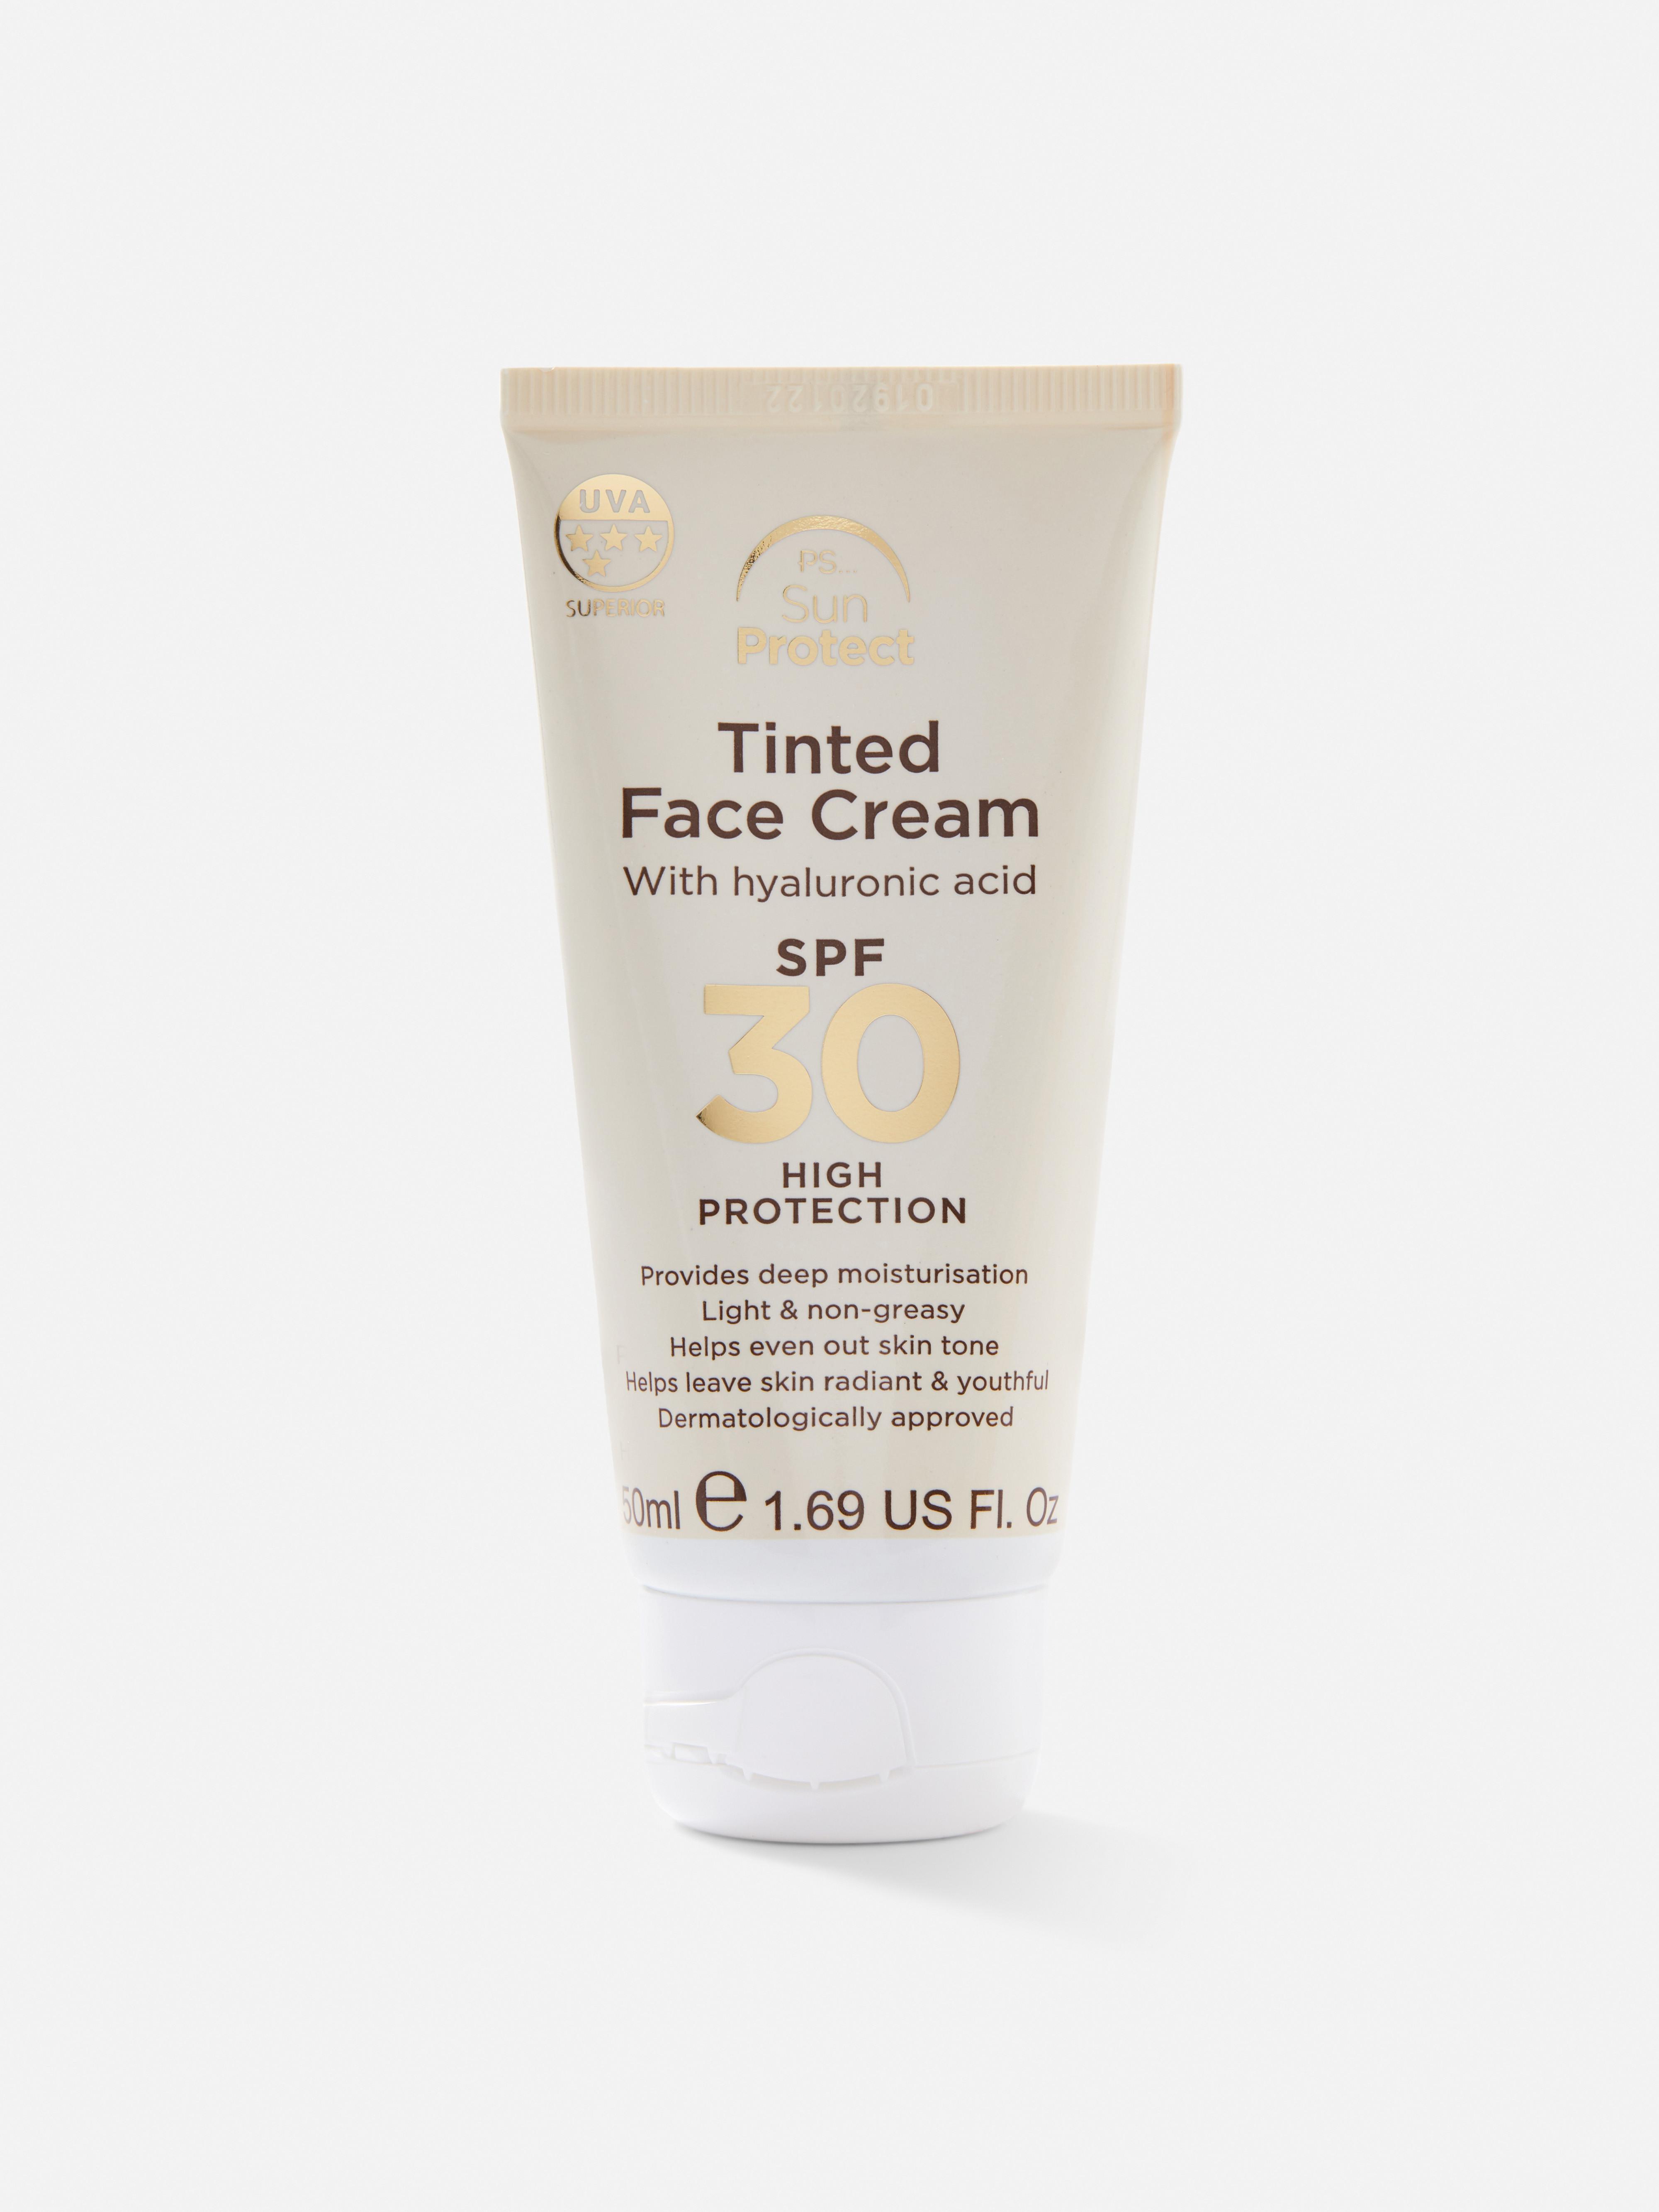 PS SPF 30 Tinted Face Cream